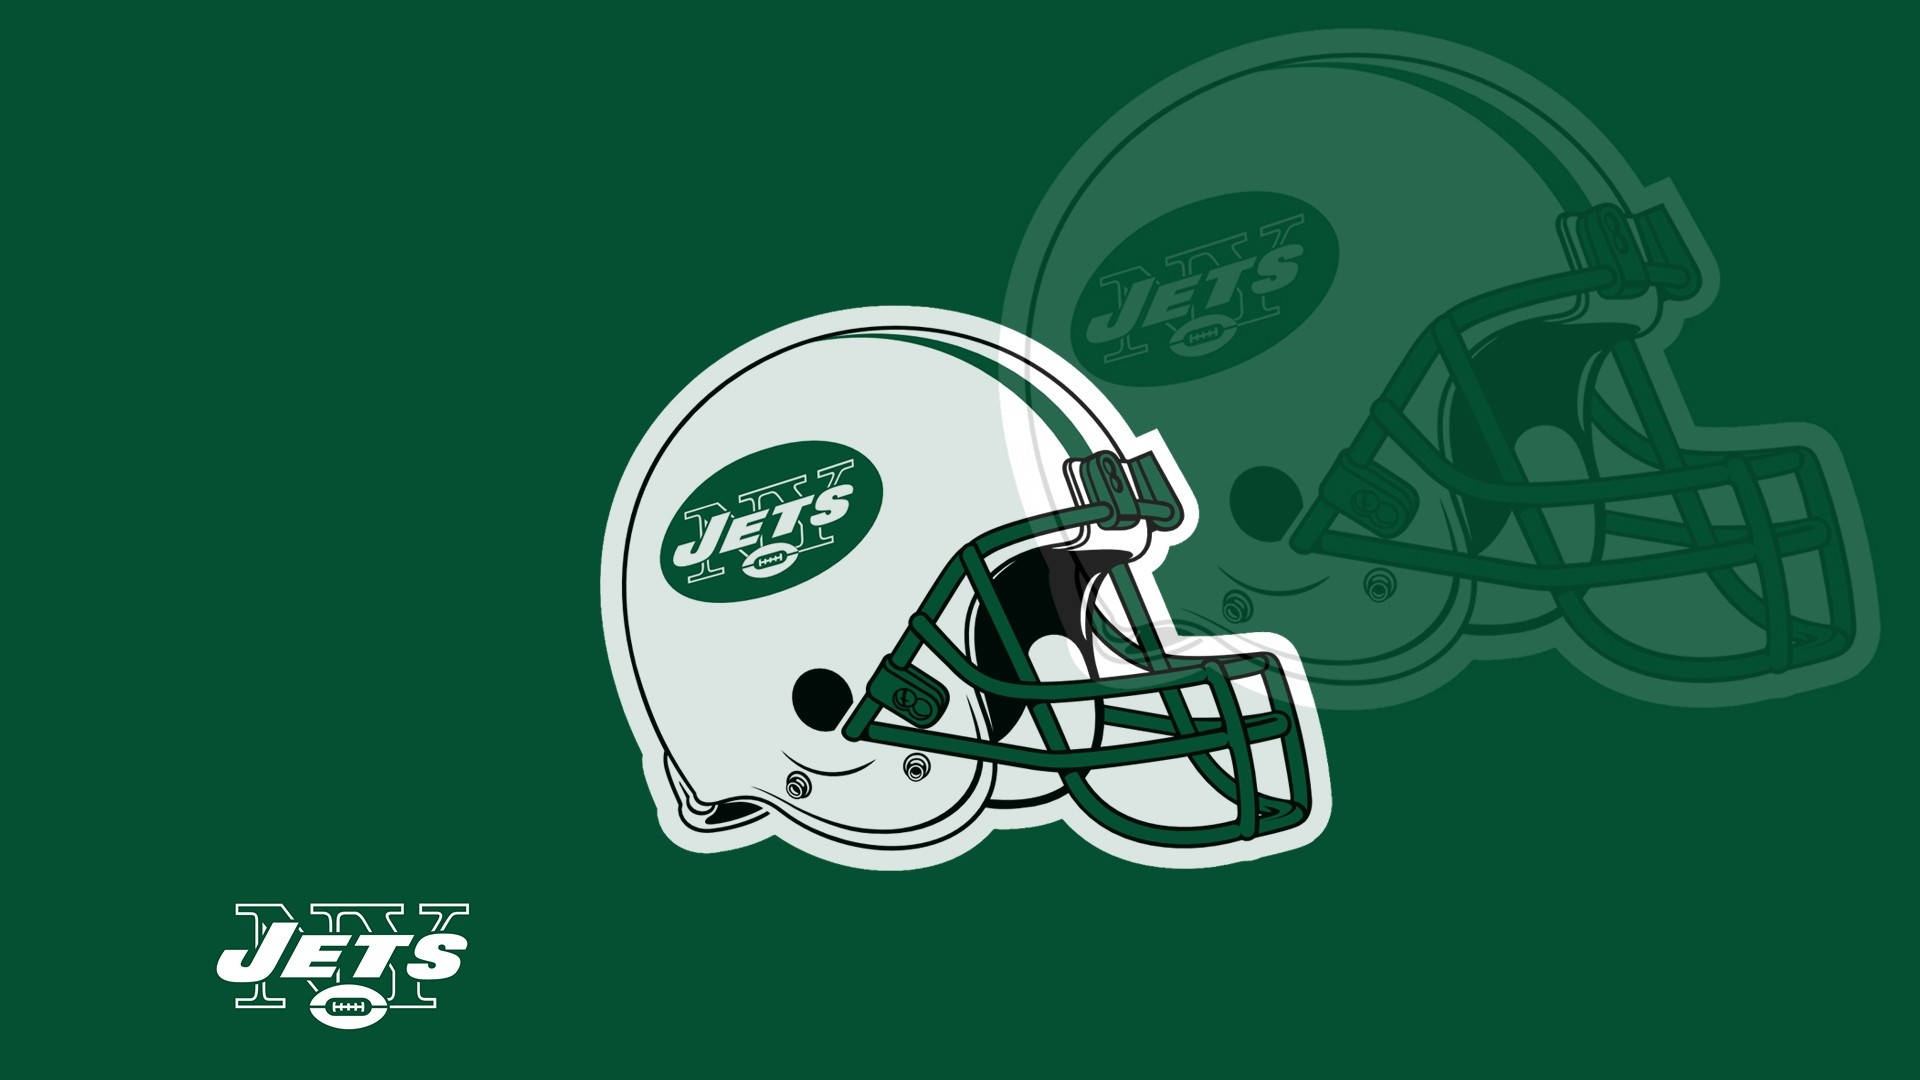 New York Jets Nfl Football Team Background